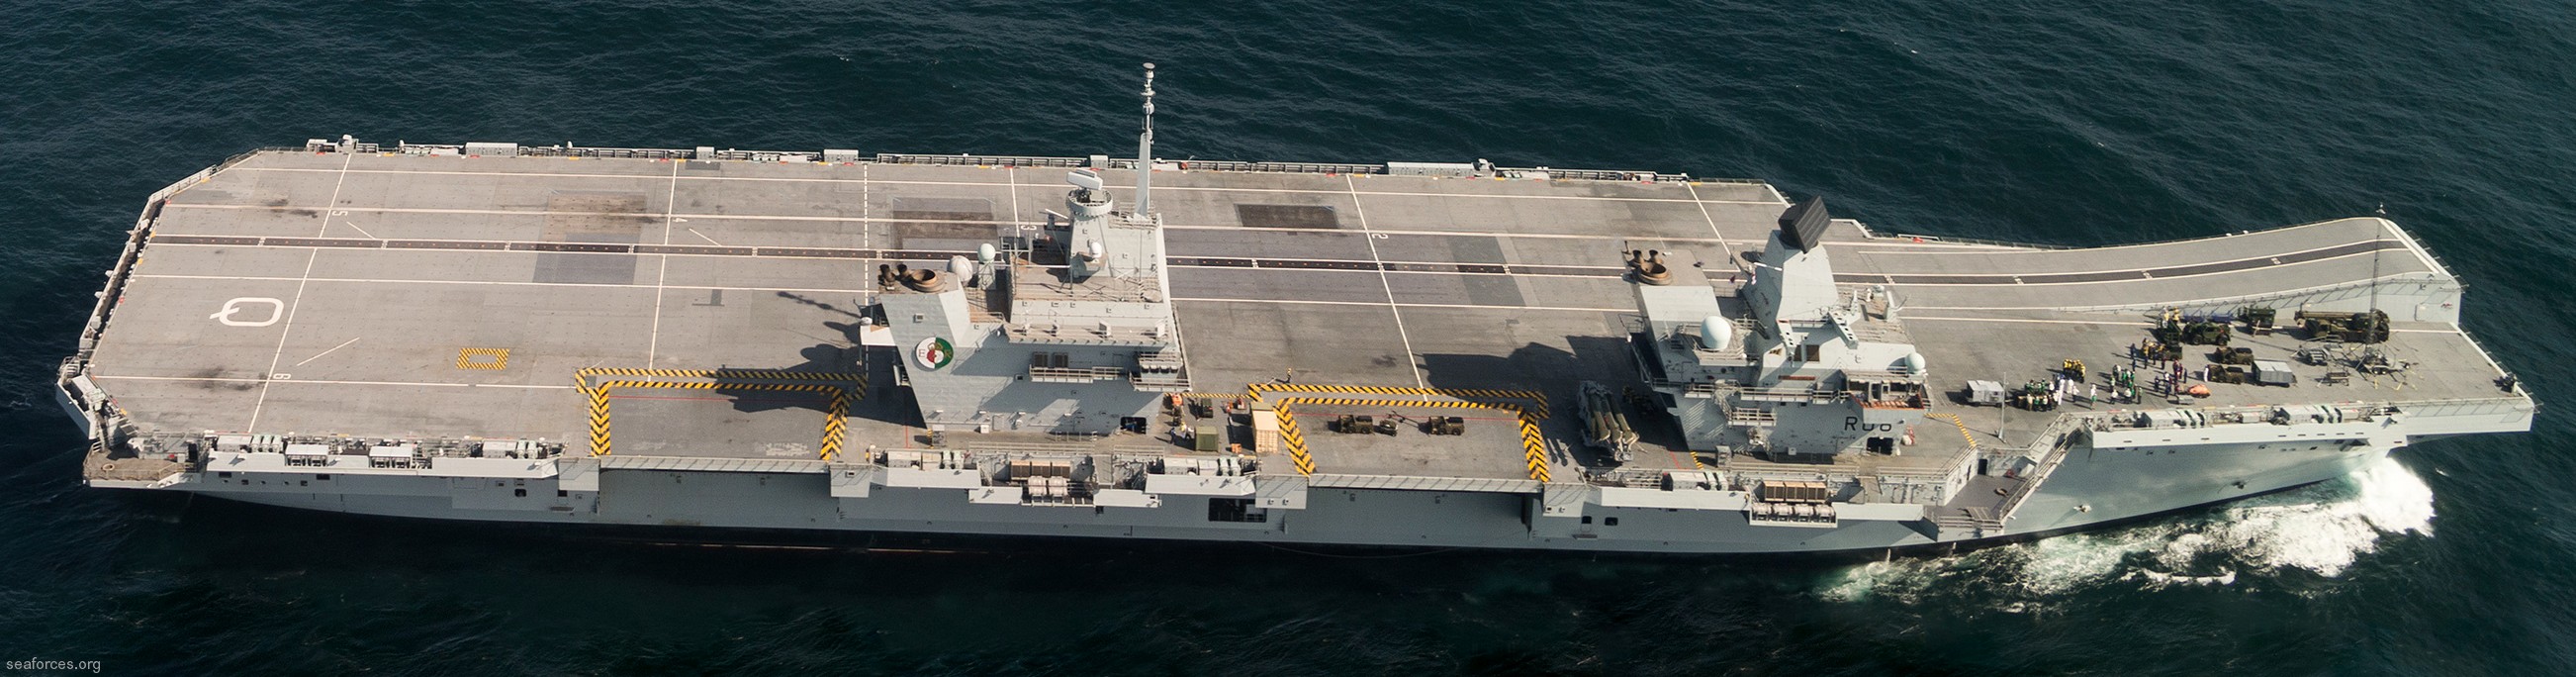 hms queen elizabeth r-08 aircraft carrier royal navy 25